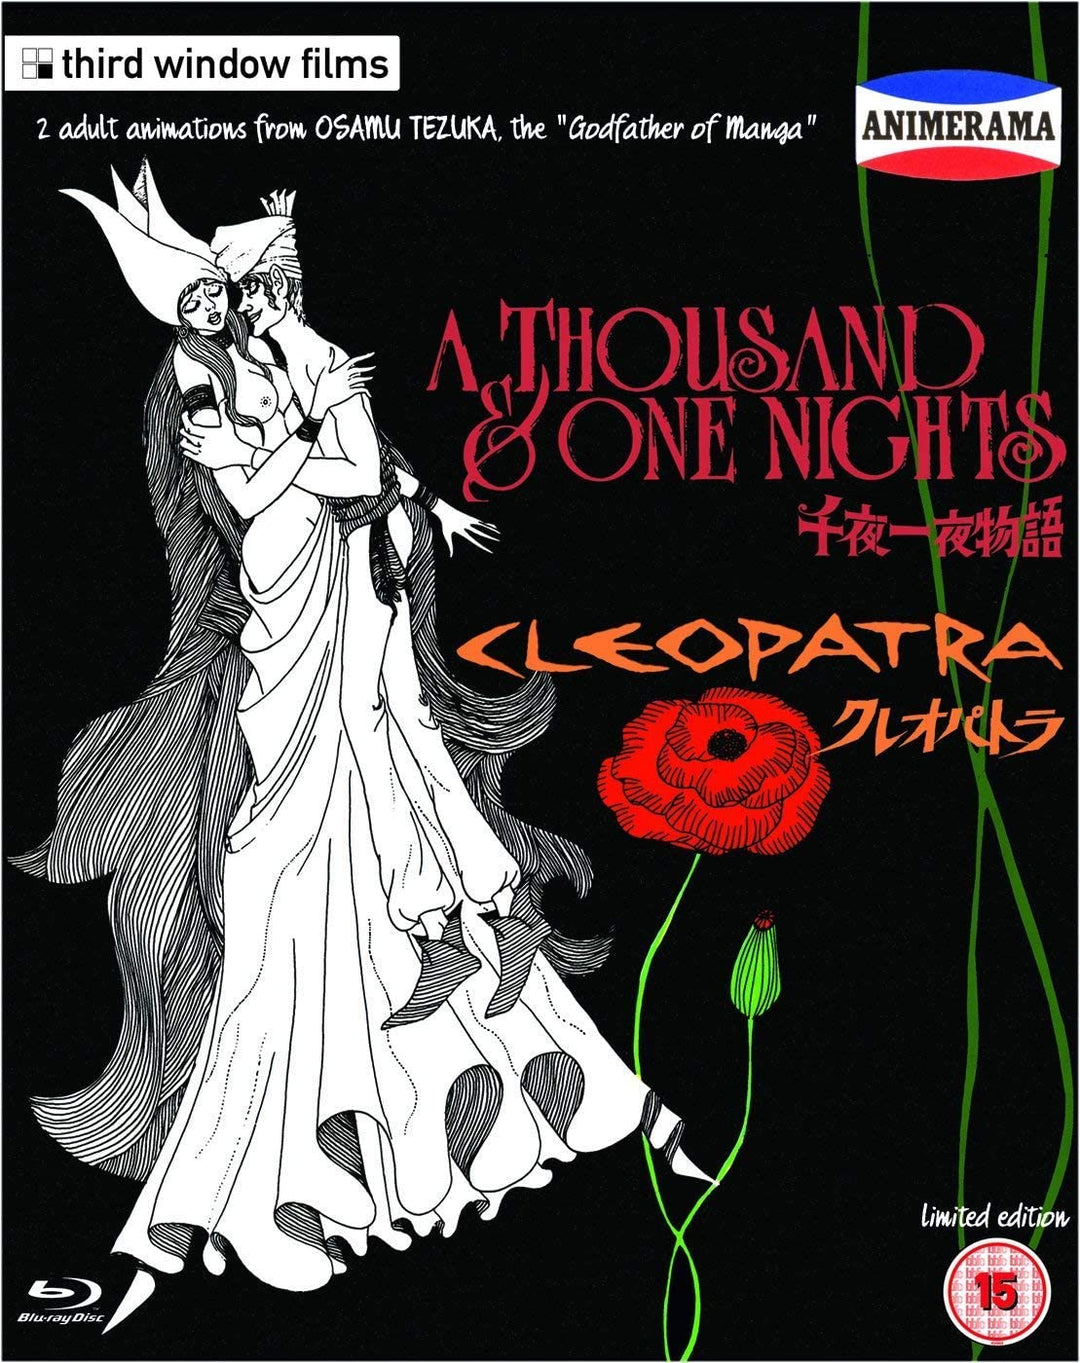 Animerama: 1001 Nights / Cleopatra - [Blu-Ray]